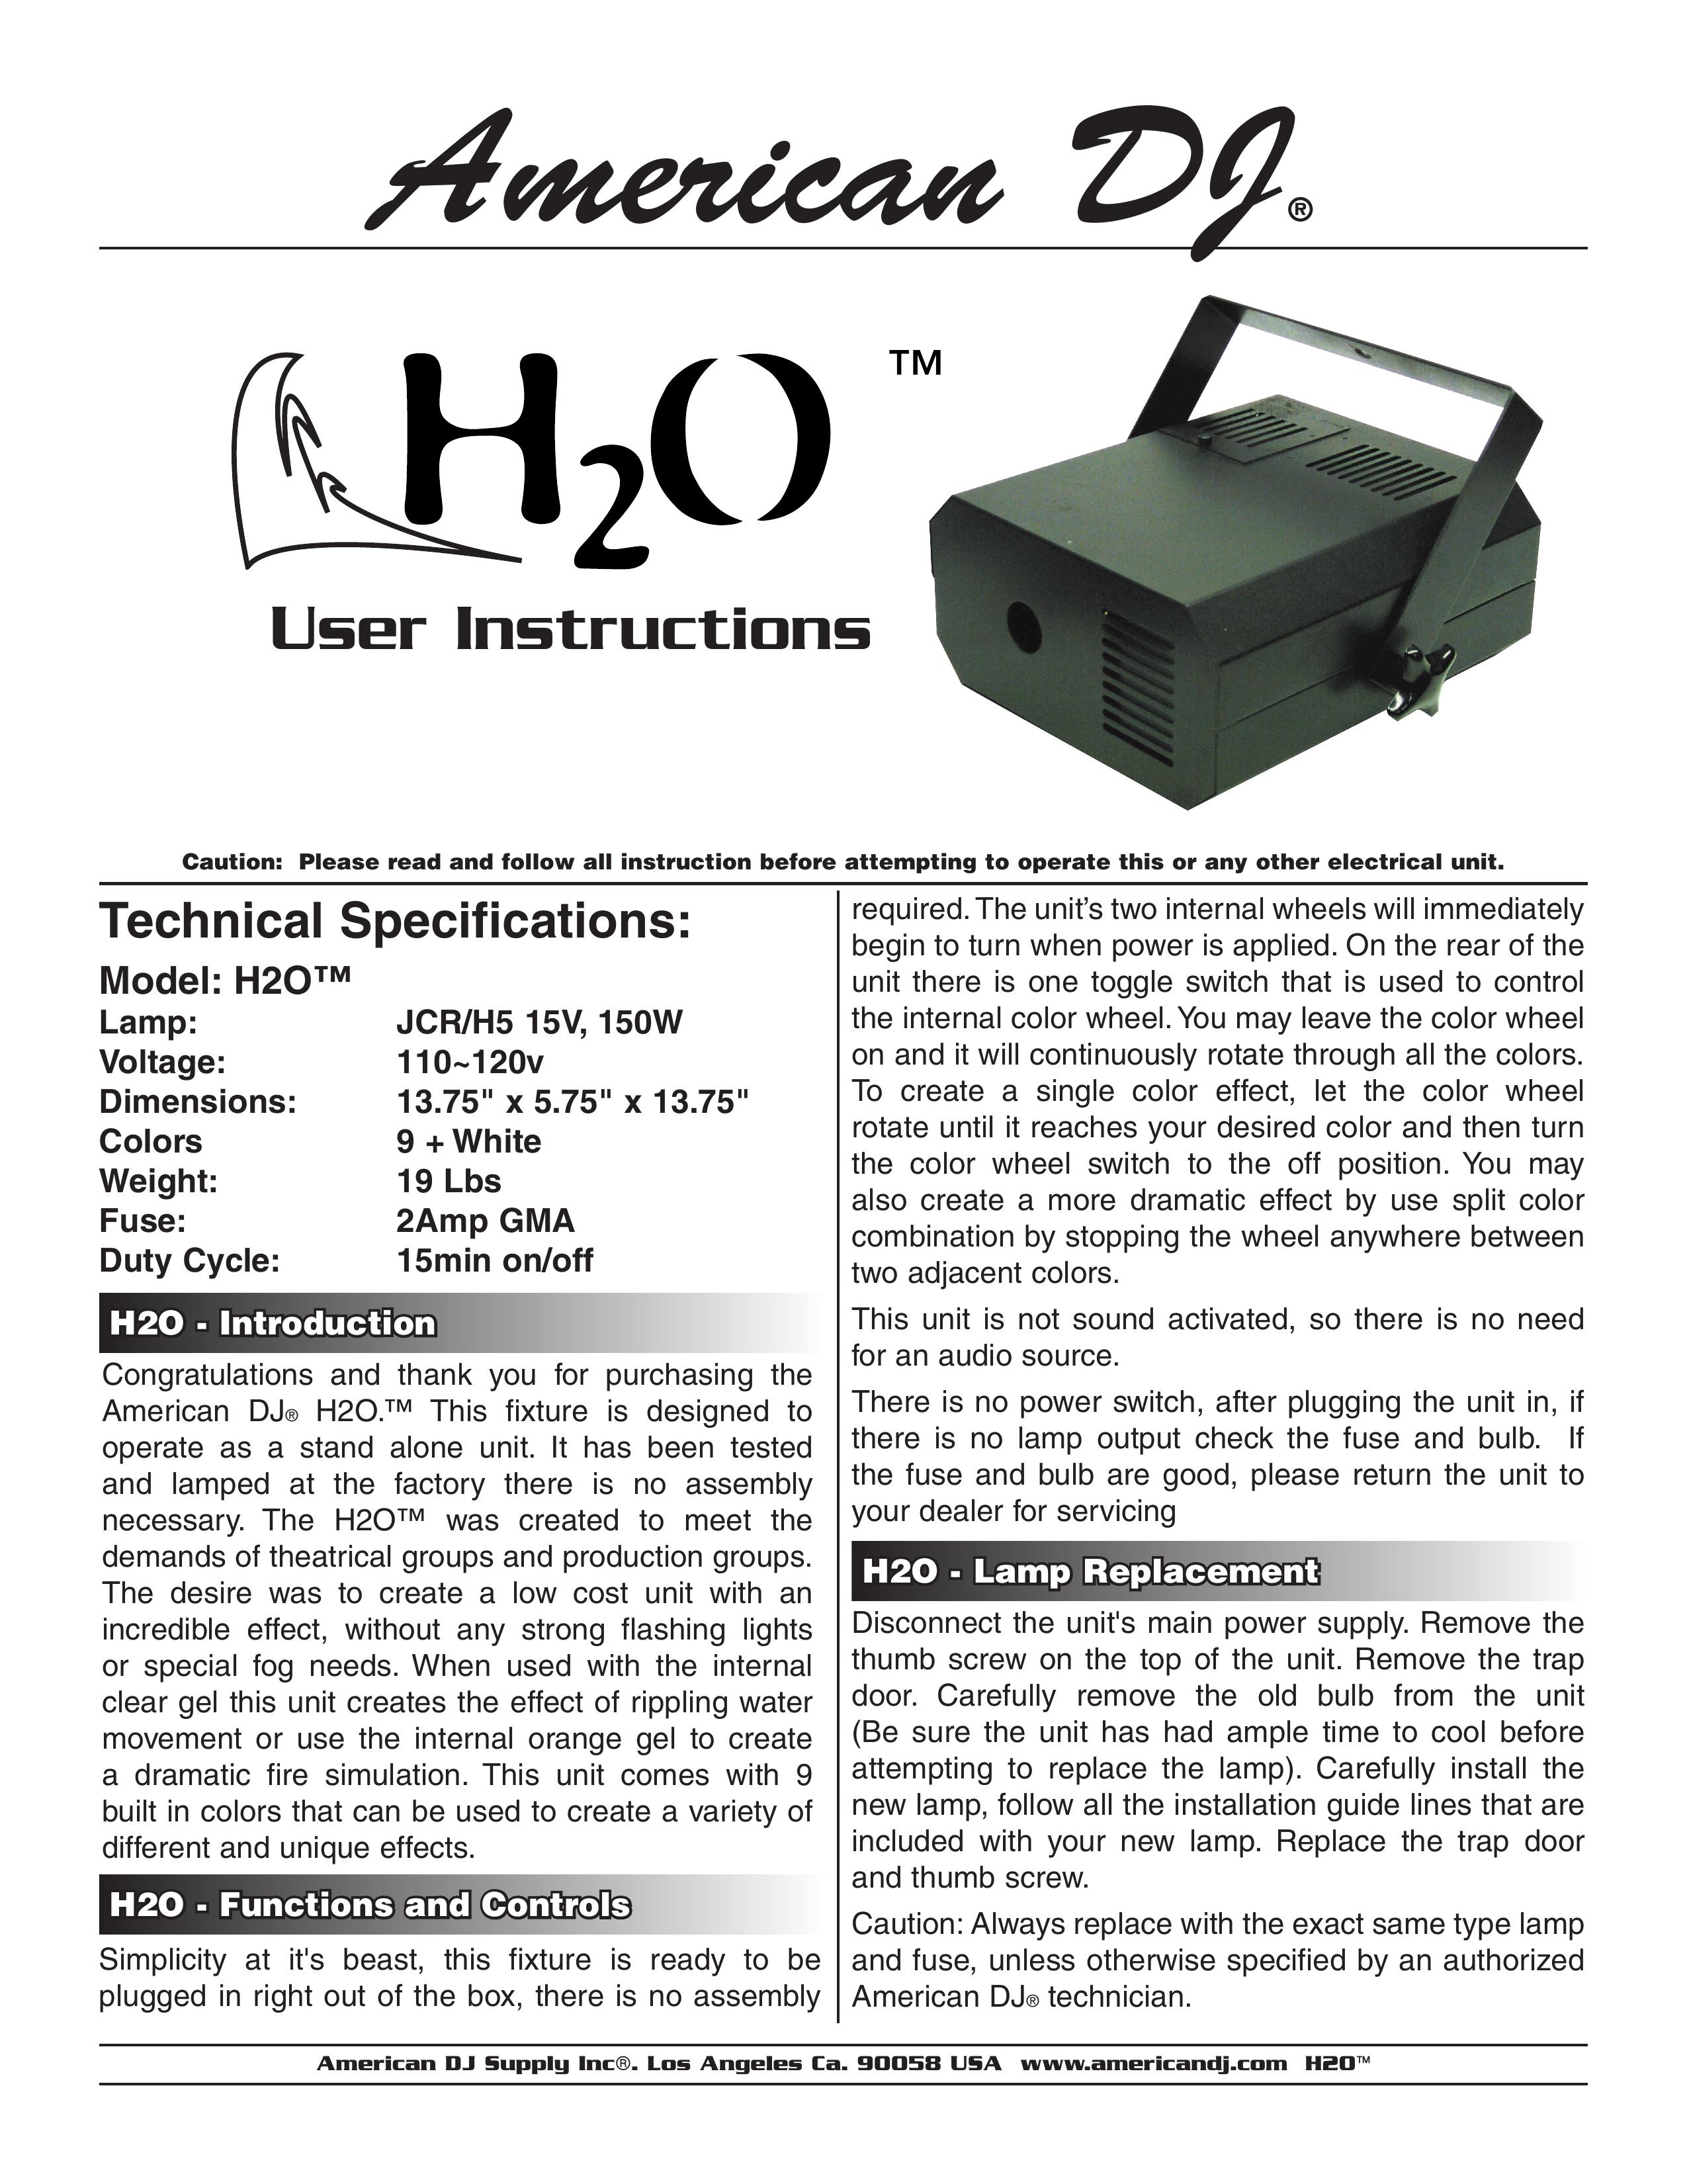 American DJ H2O DJ Equipment User Manual (Page 1)